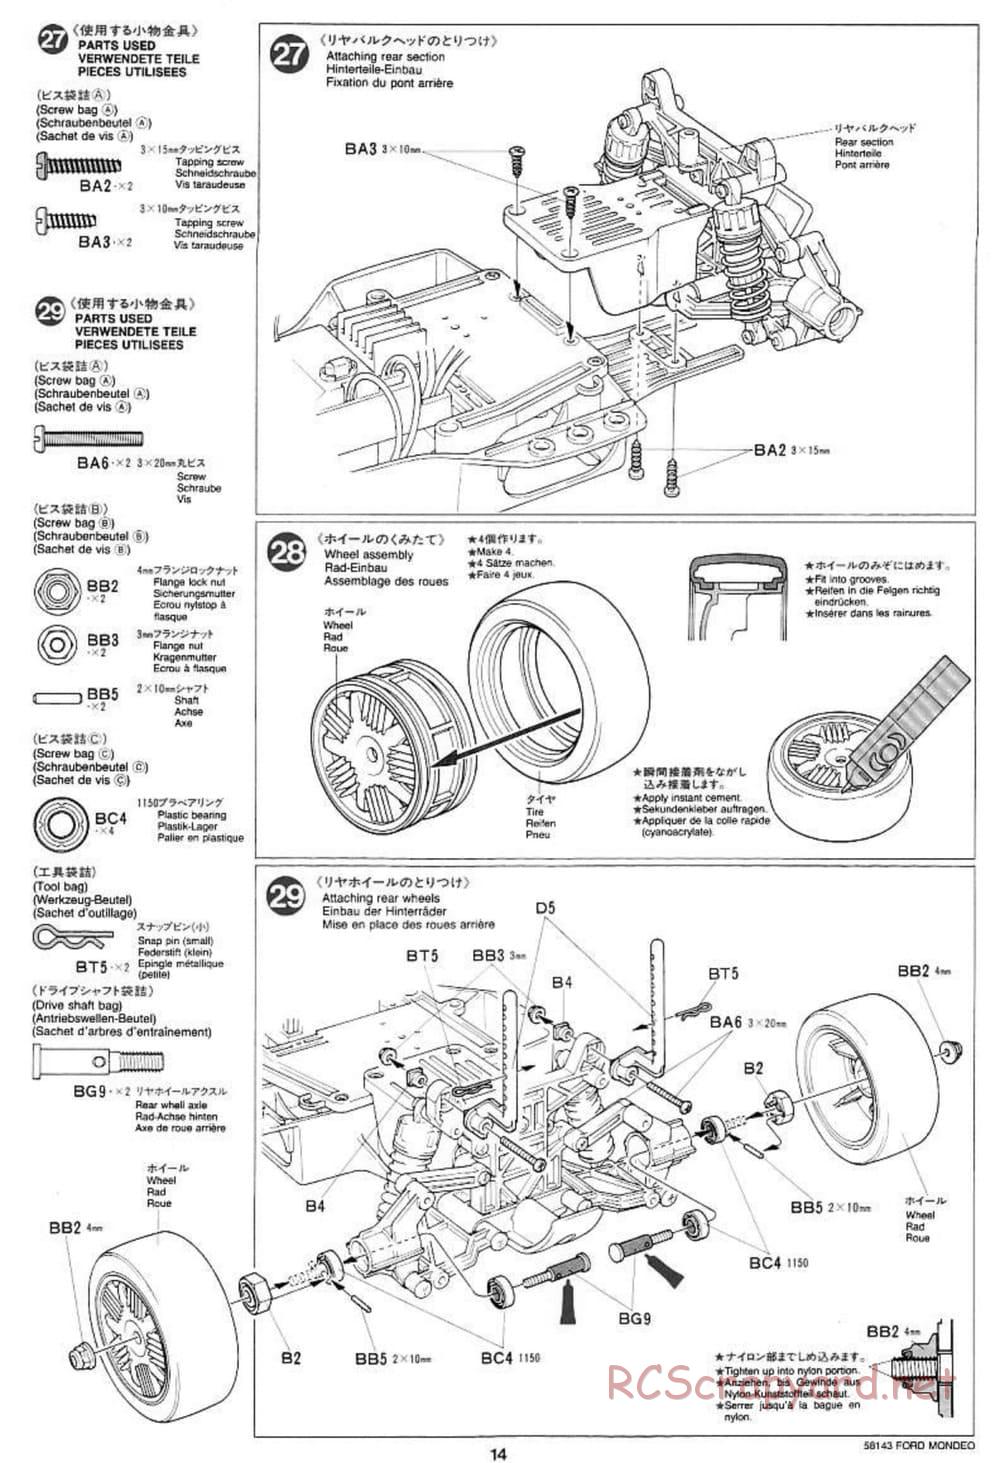 Tamiya - Ford Mondeo BTCC - FF-01 Chassis - Manual - Page 14